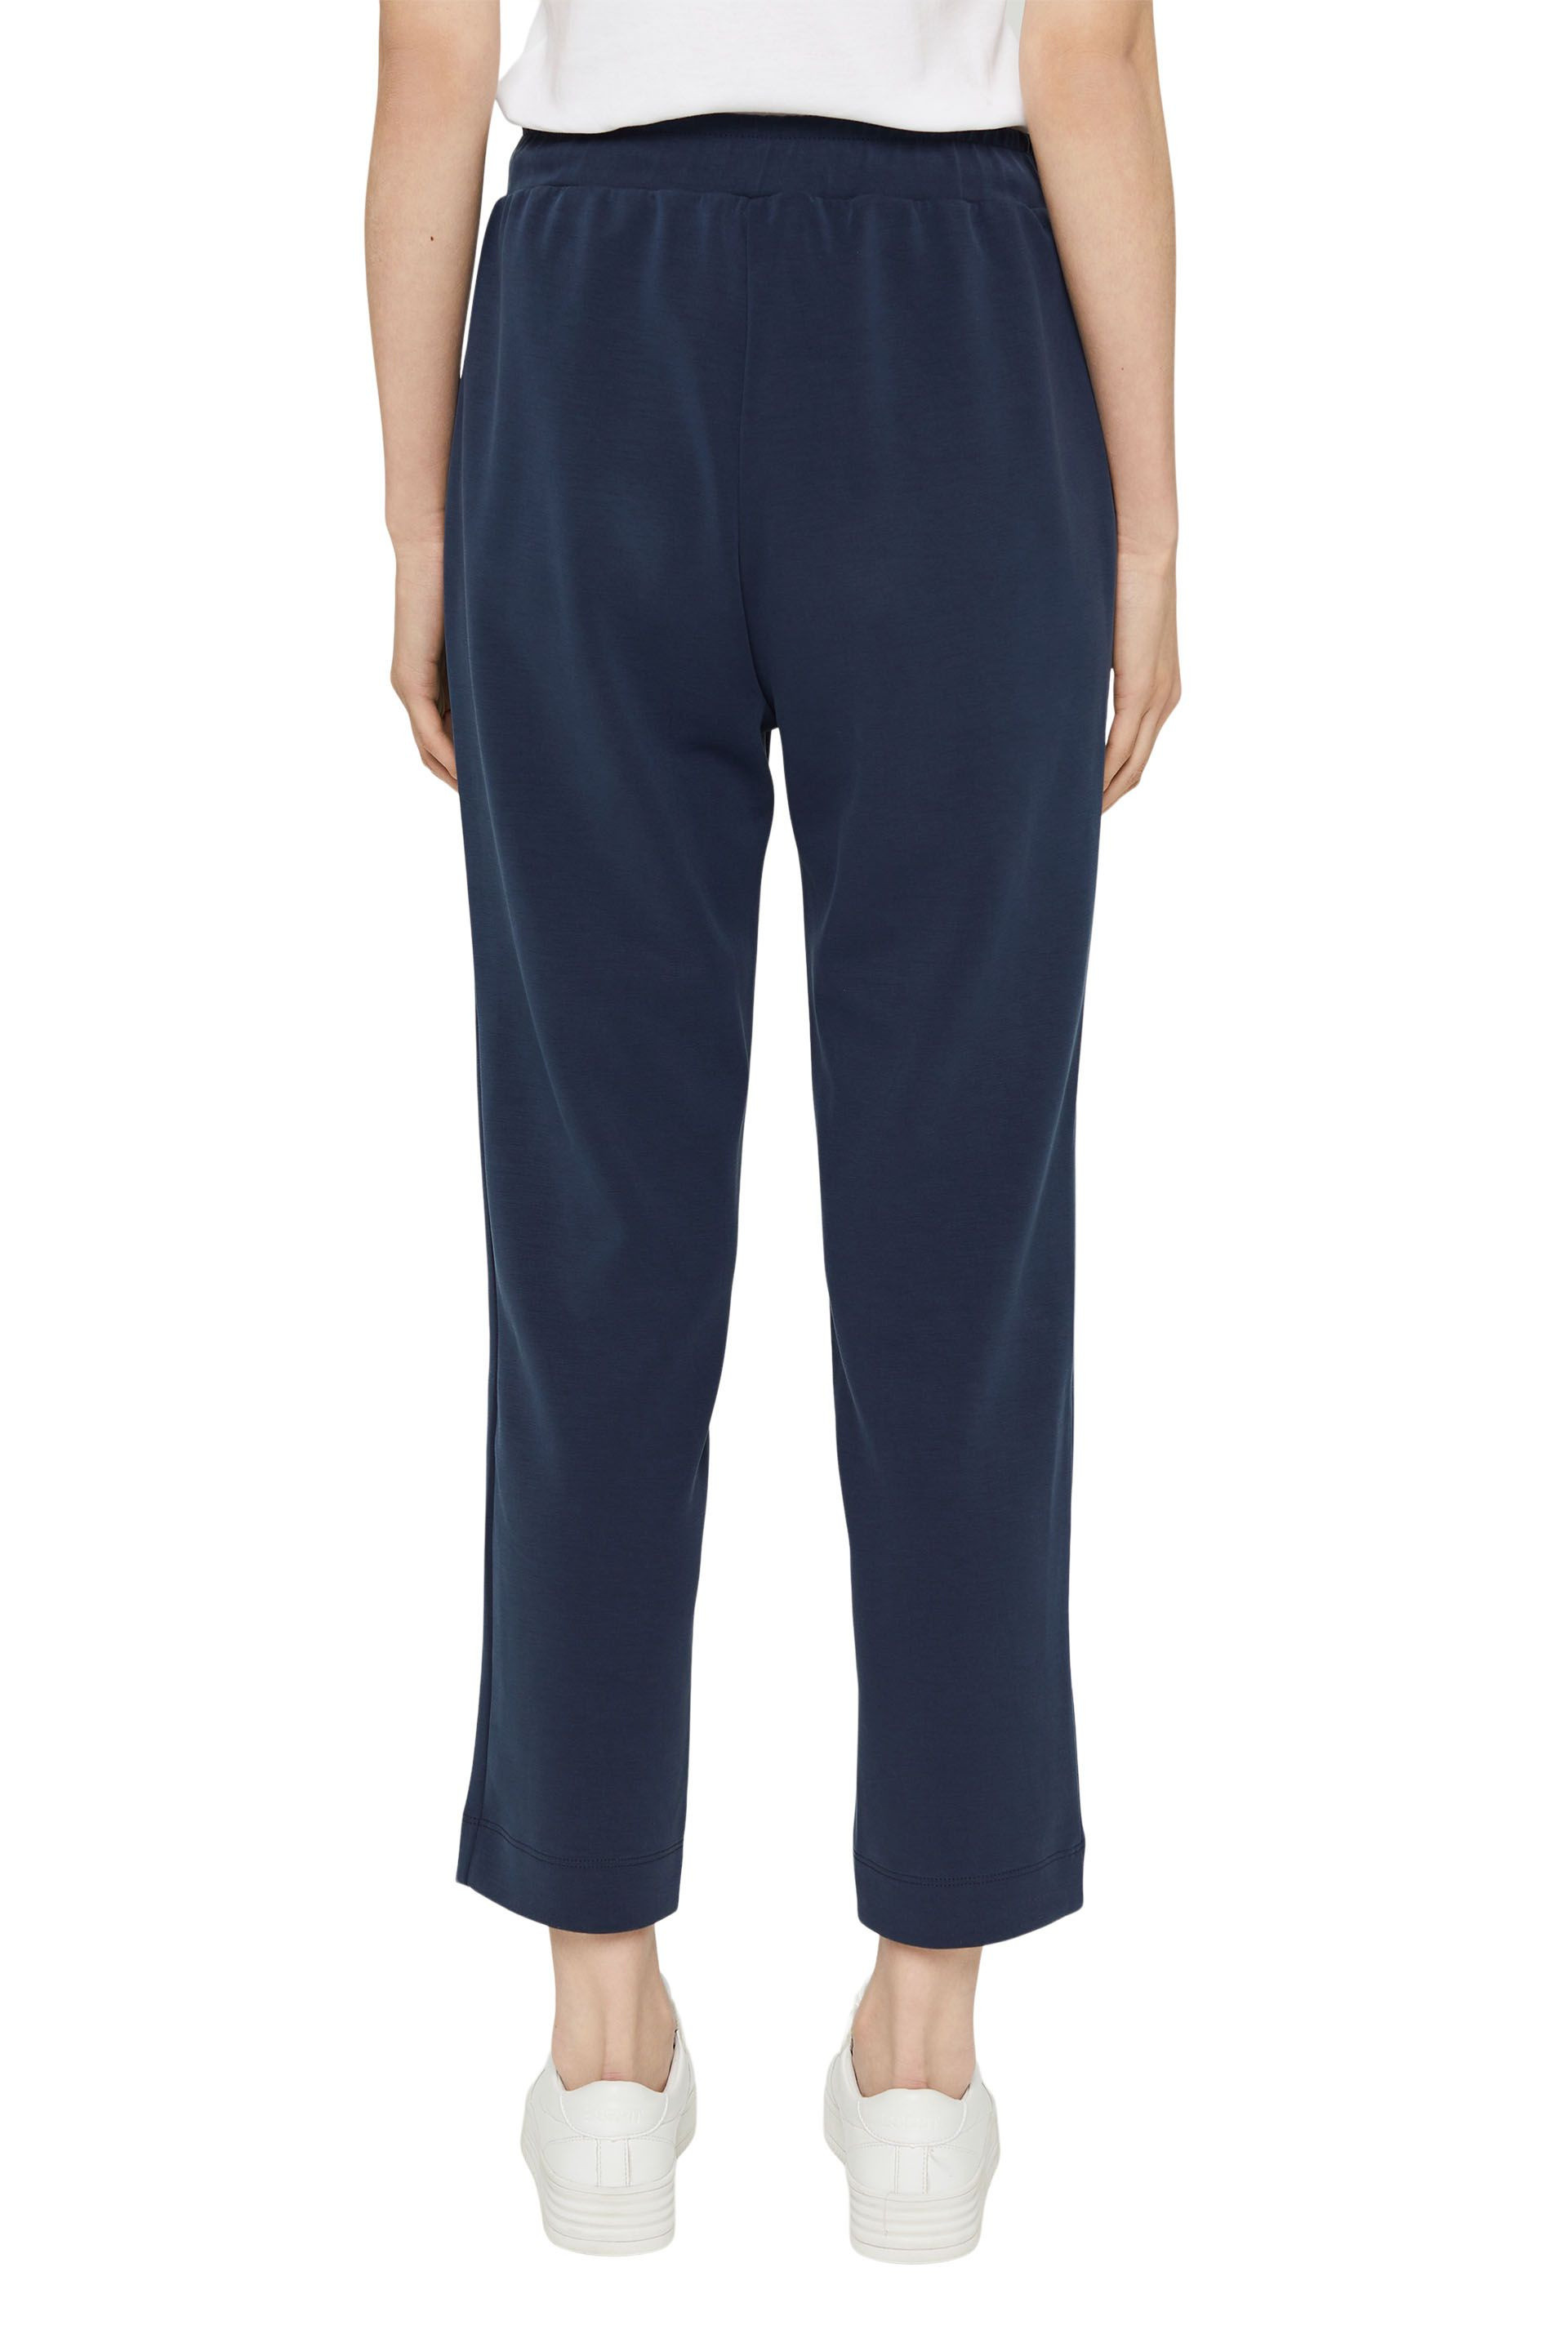 Pantalone sportivo, Blu, large image number 2